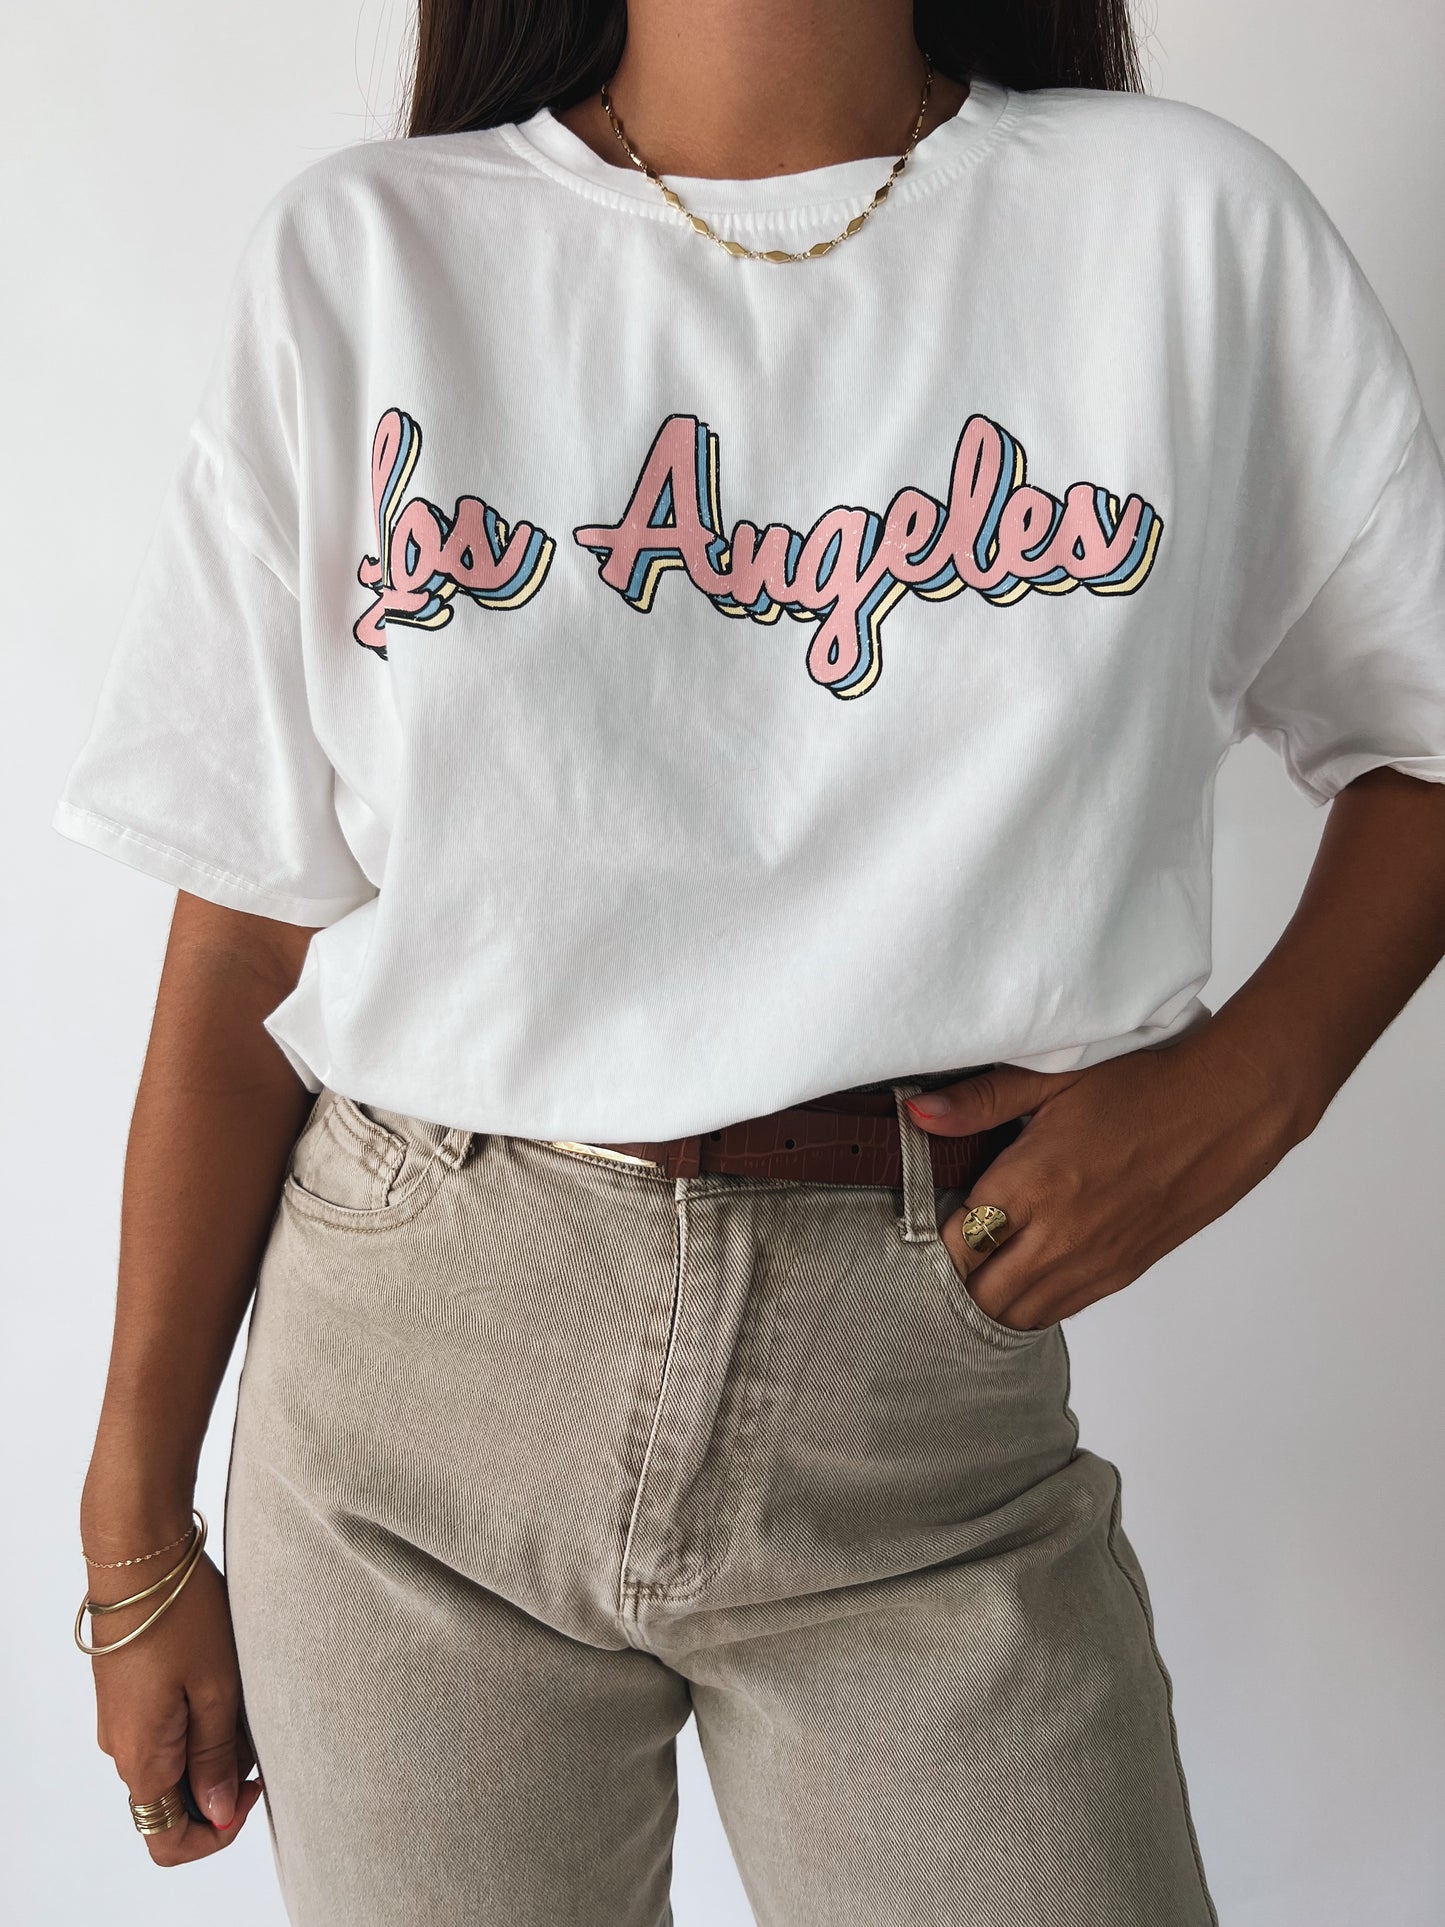 Tee-shirt Los Angeles